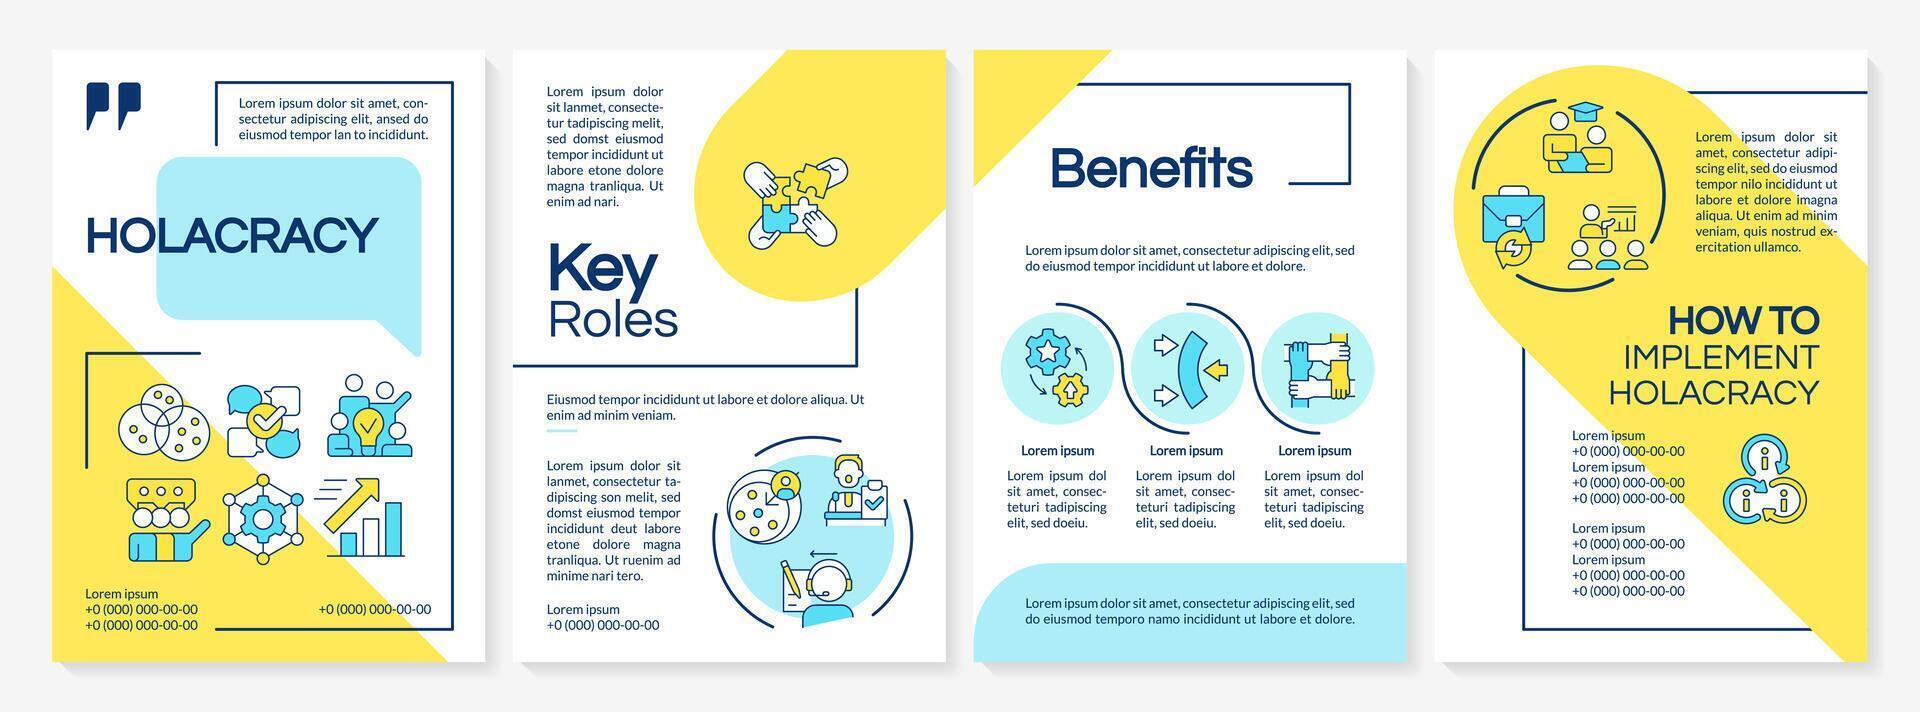 holocracia estructura azul y amarillo folleto modelo. beneficios. folleto diseño con lineal iconos editable 4 4 vector diseños para presentación, anual informes